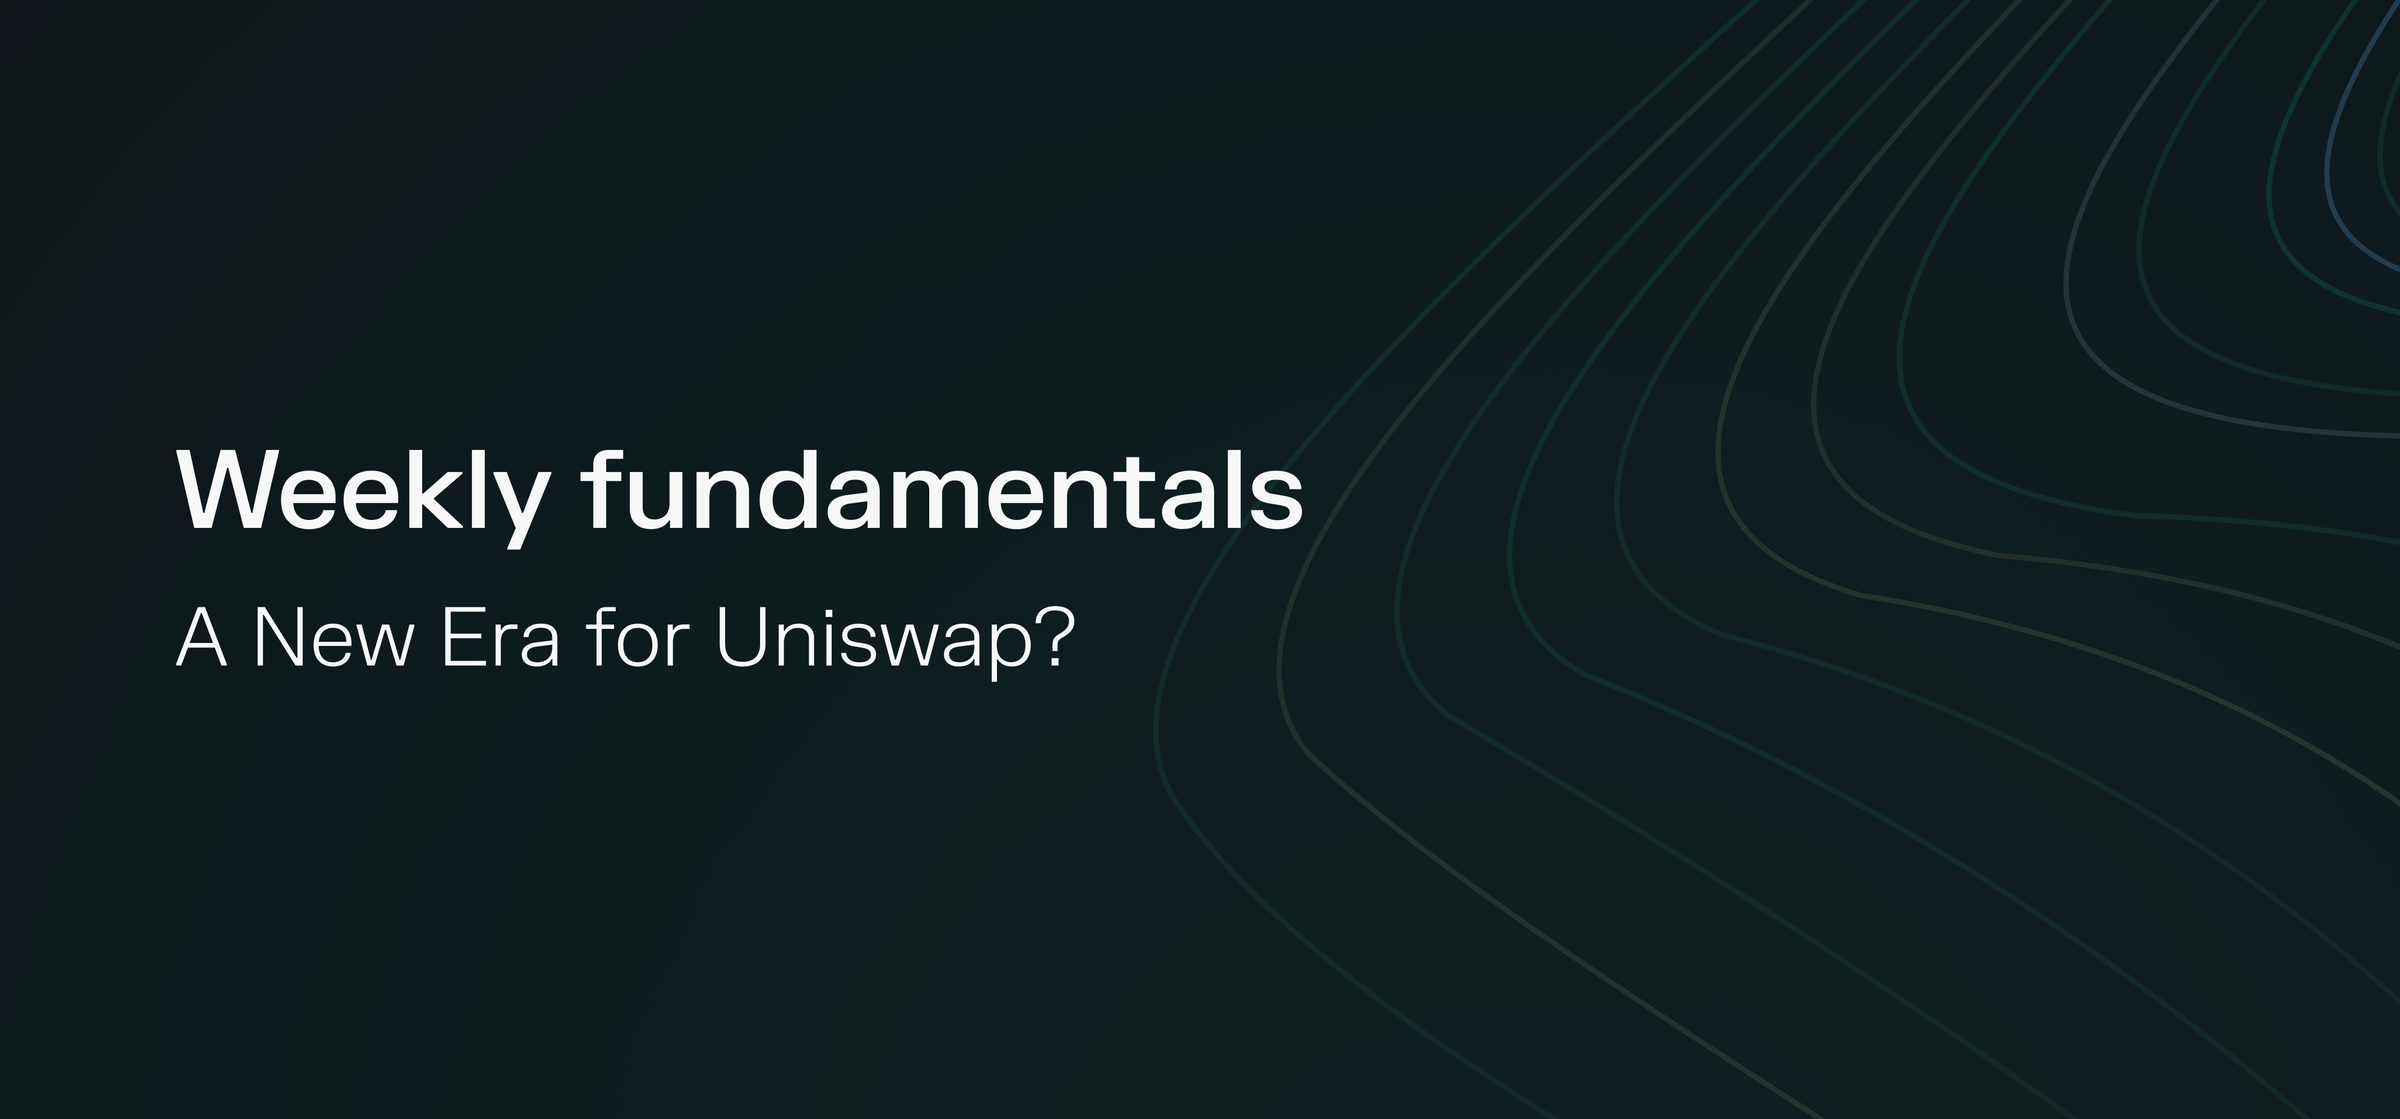 Weekly fundamentals – A New Era for Uniswap?